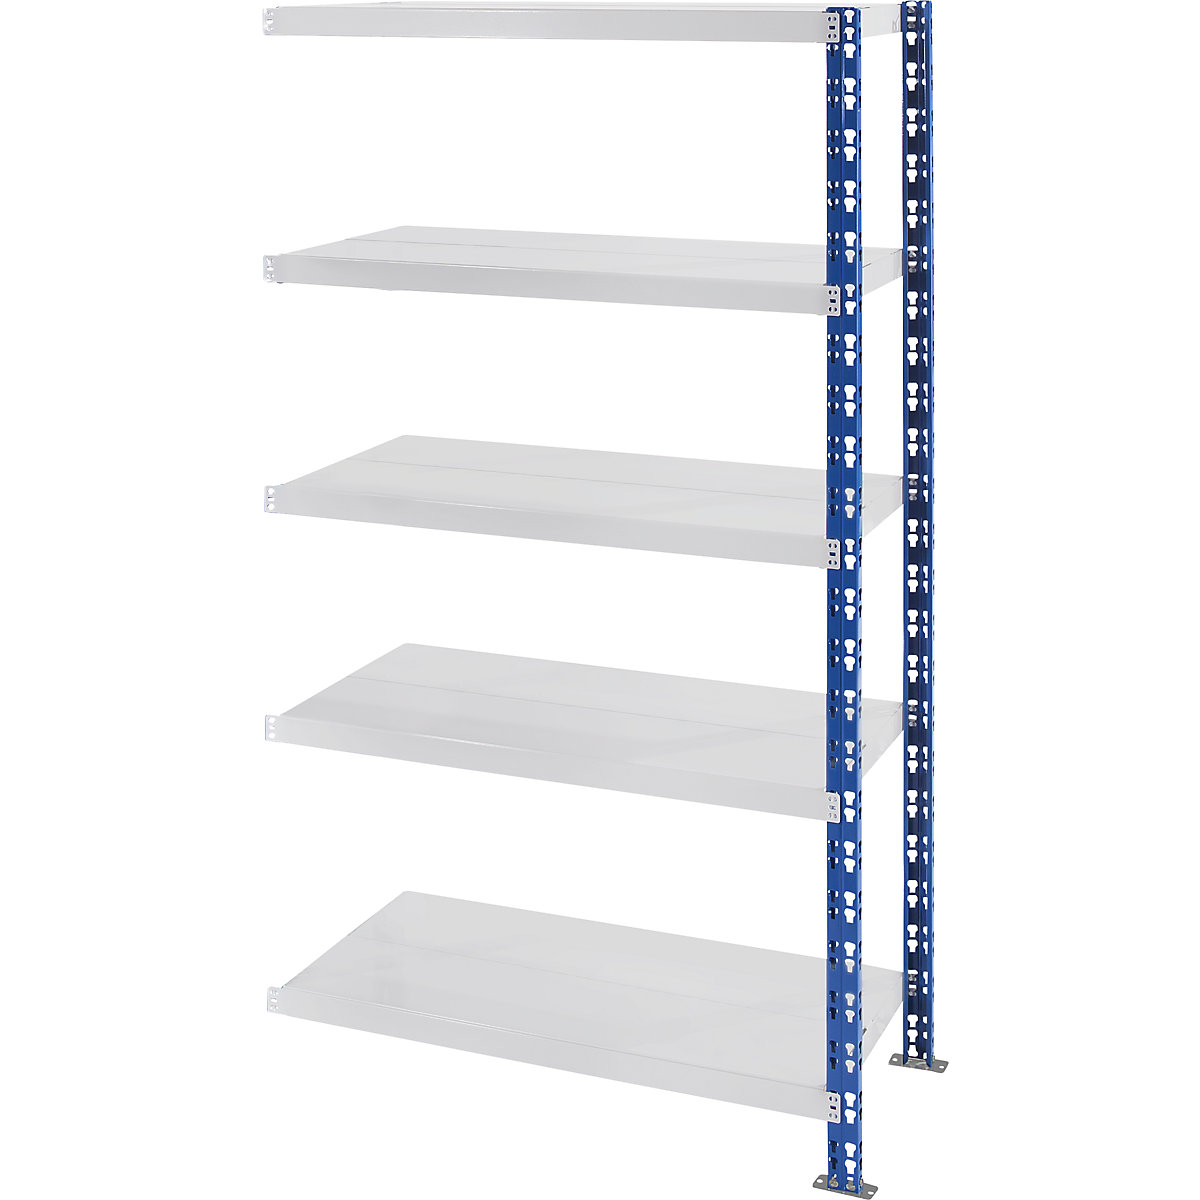 Universal boltless shelving unit, robust – eurokraft basic, sheet steel shelves, HxWxD 1820 x 1025 x 400 mm, extension shelf unit